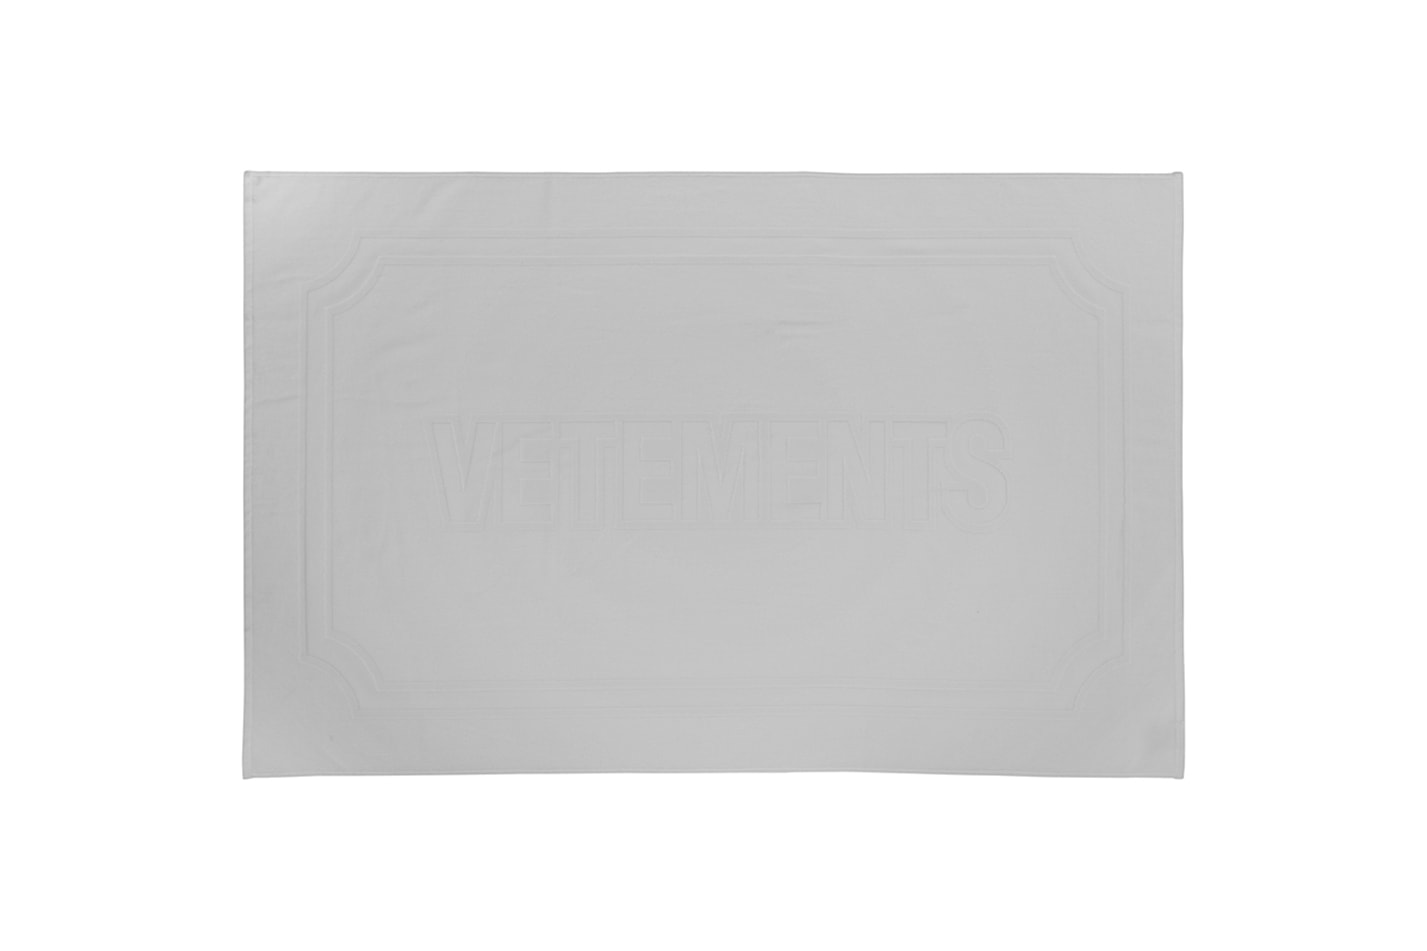 Vetements White Logo Beach Towel $540 USD 59 x 39 Inches Demna Gvasalia Balenciaga